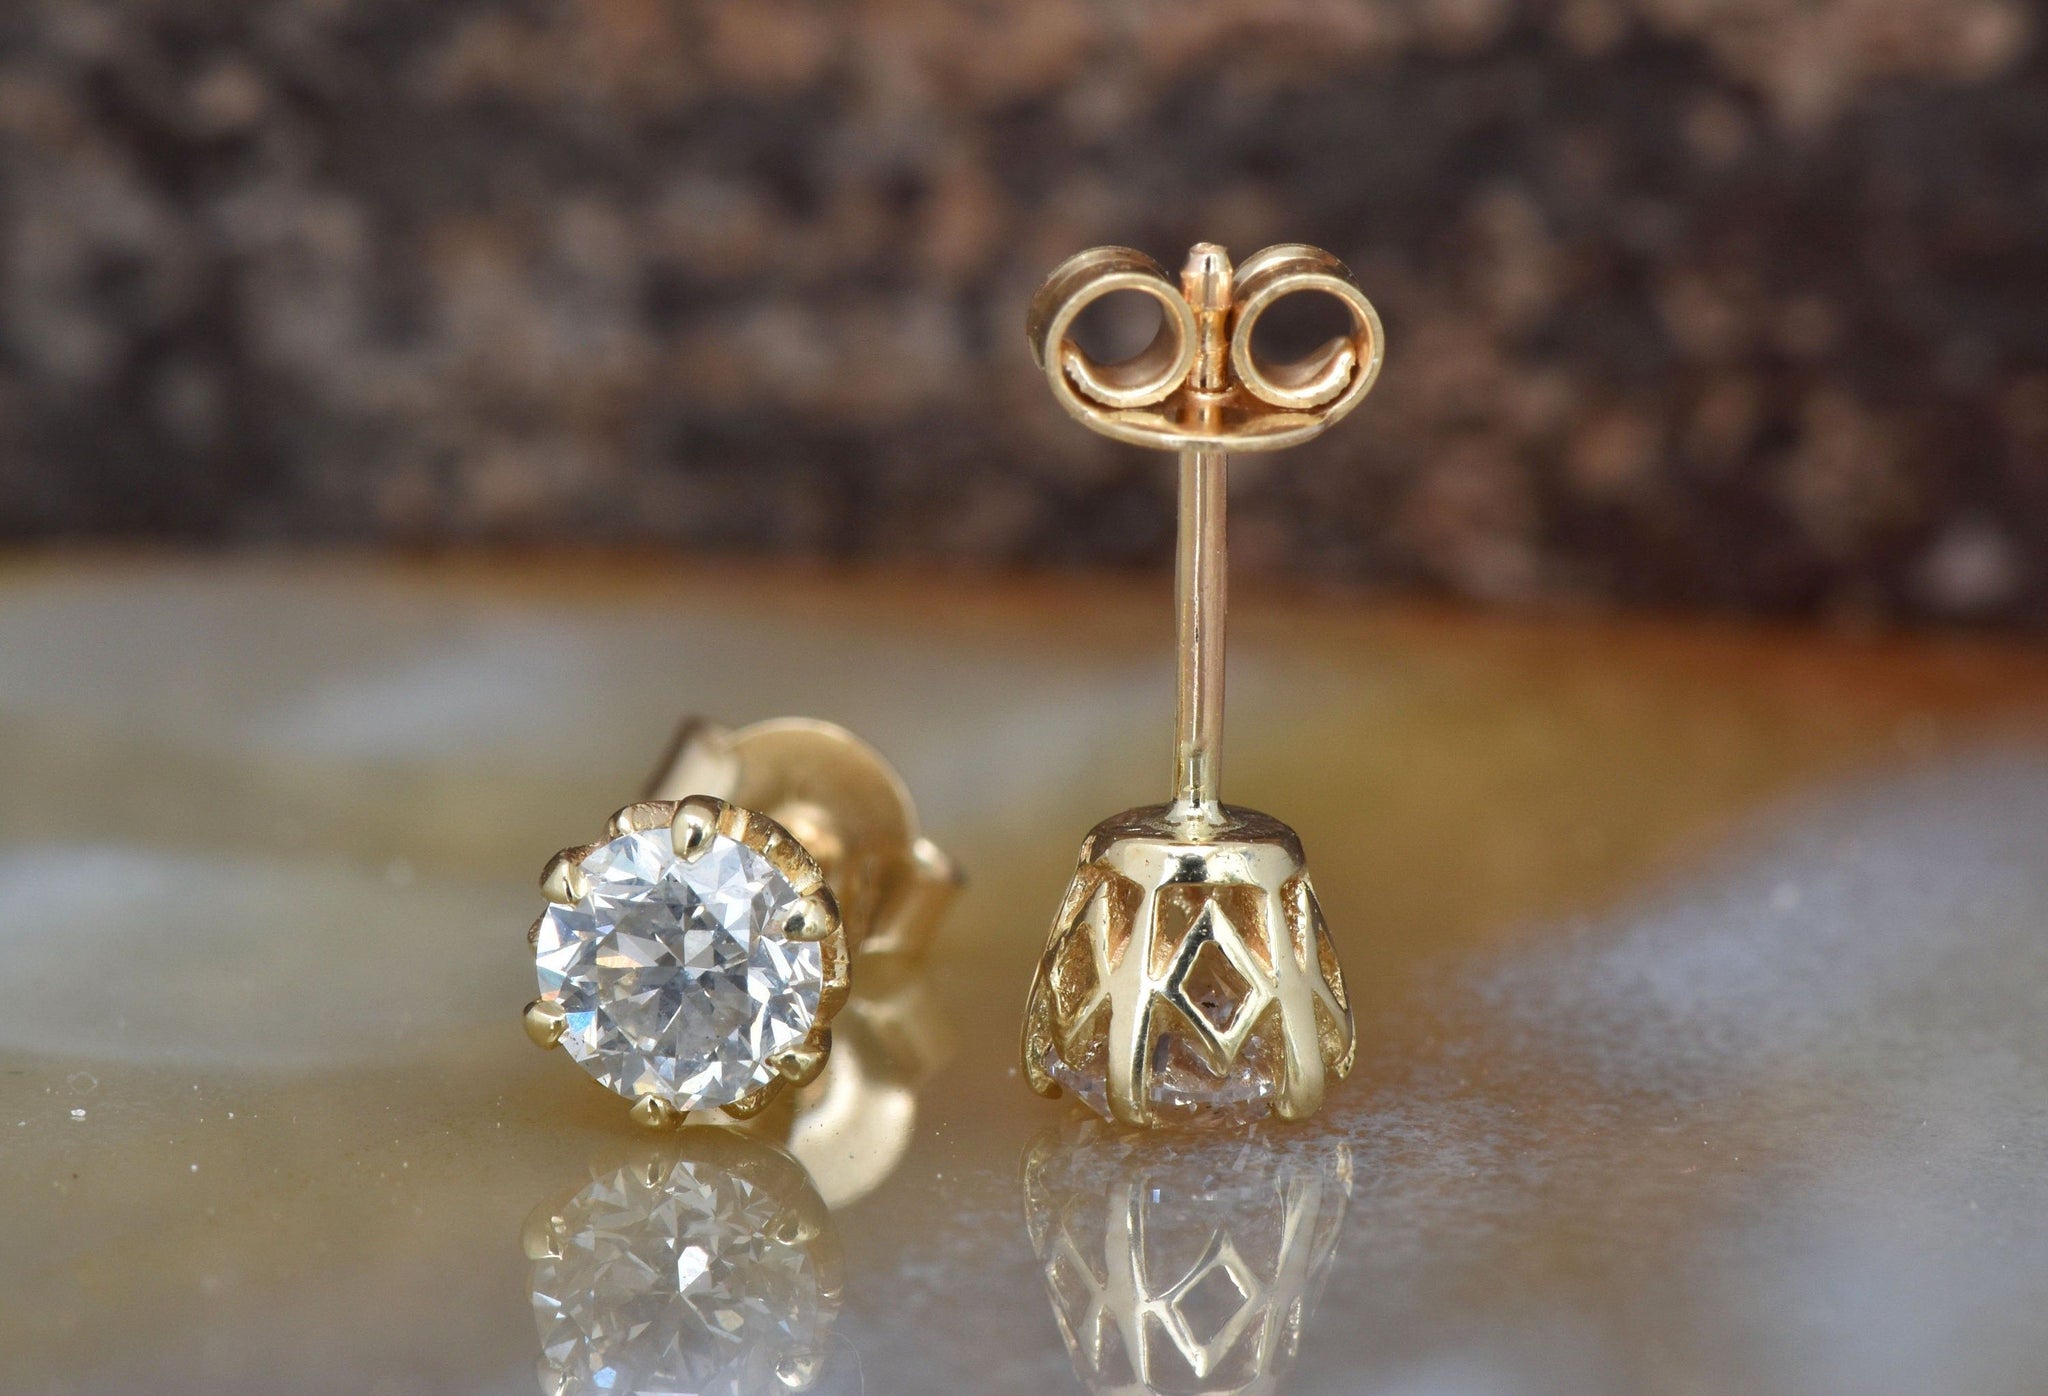 1 Carat Diamond Earrings Yellow Gold Earrings Diamond Stud